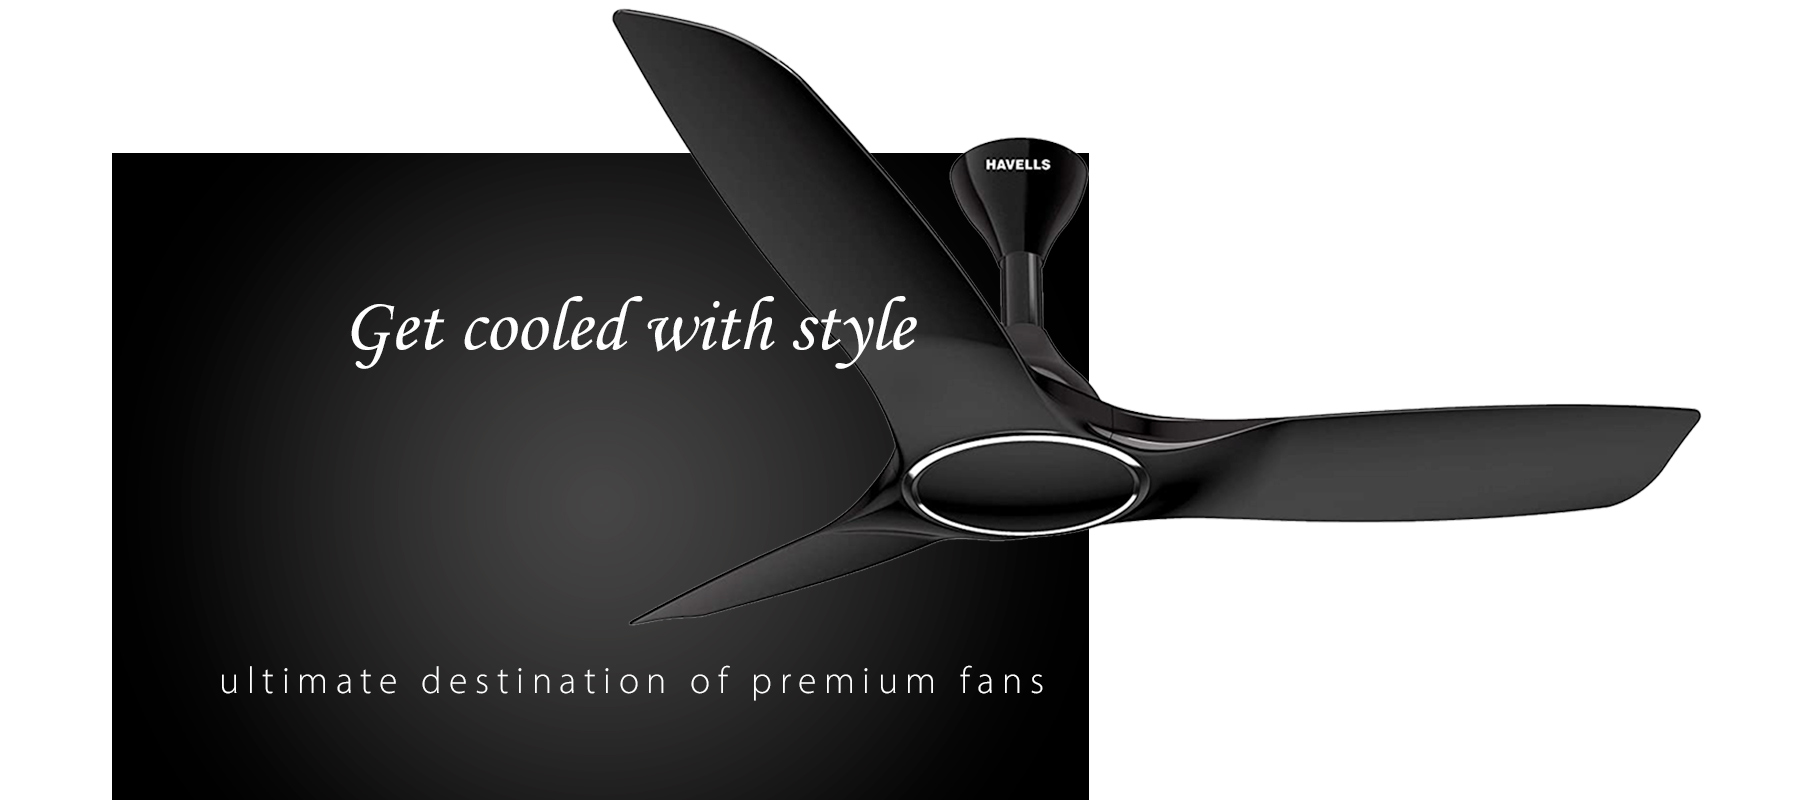 Premium brand fans